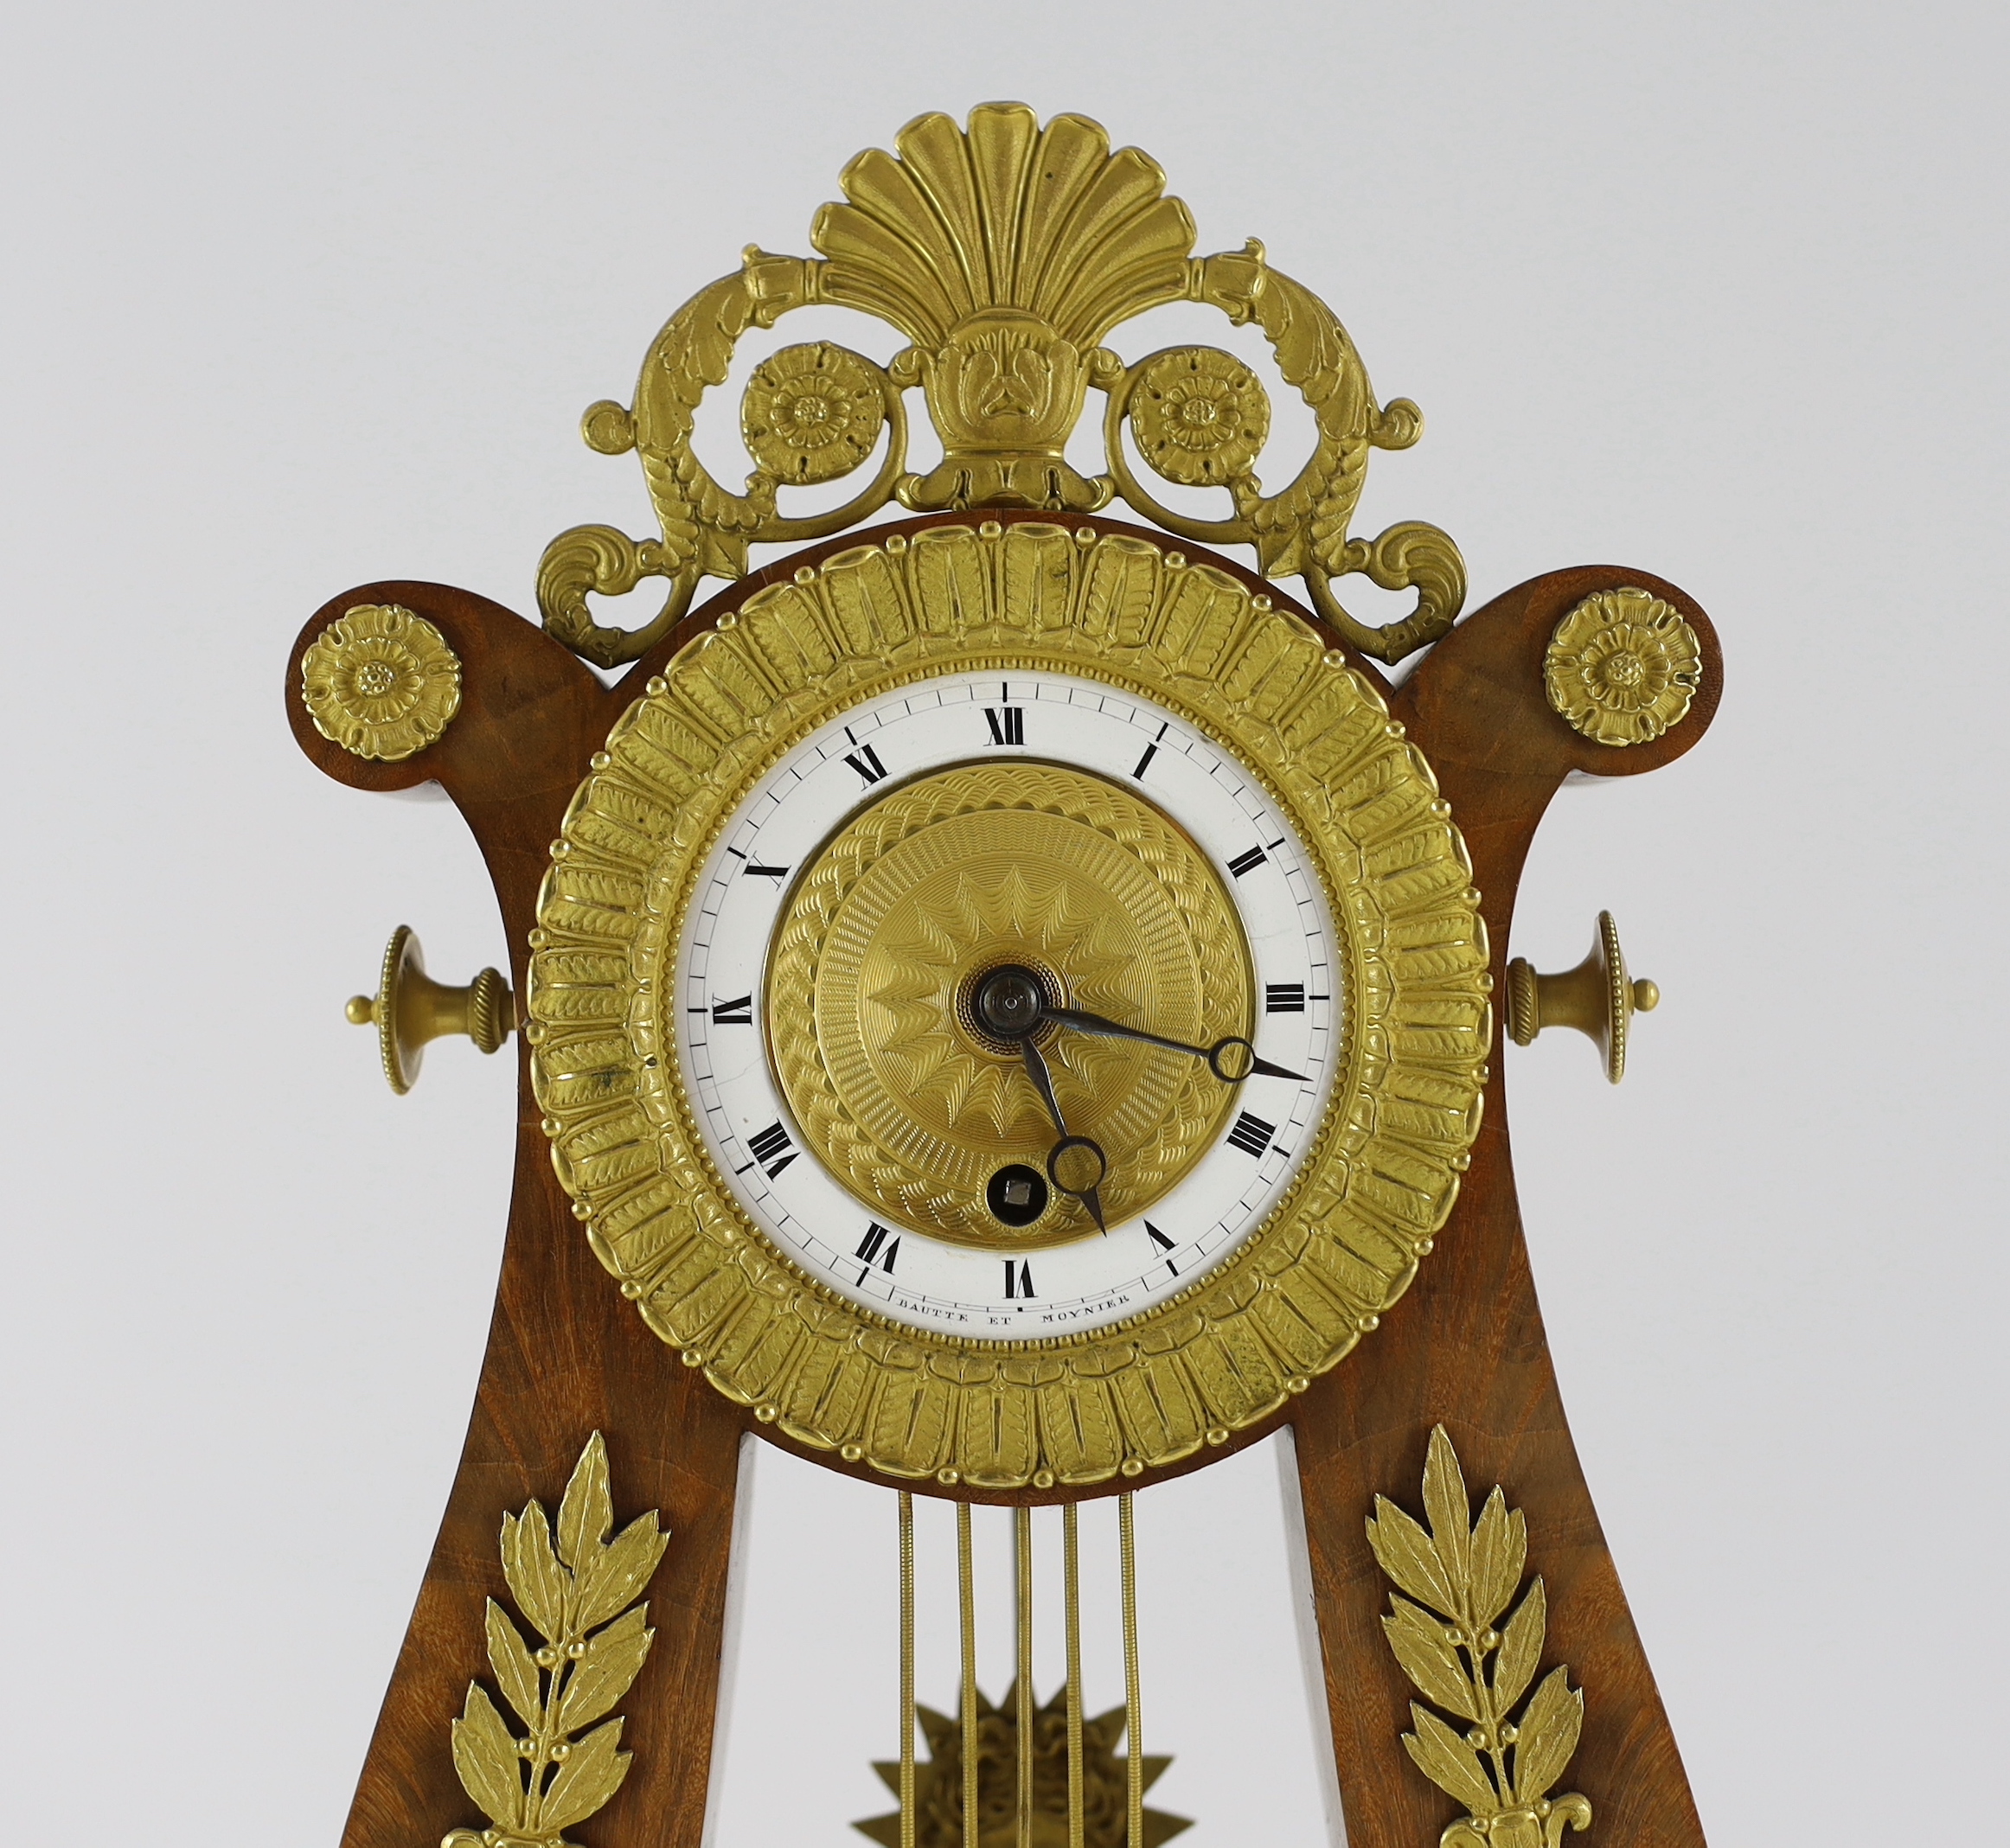 Bautte et Moynier, an early 19th century Swiss ormolu mounted mahogany lyre shaped mantel timepiece